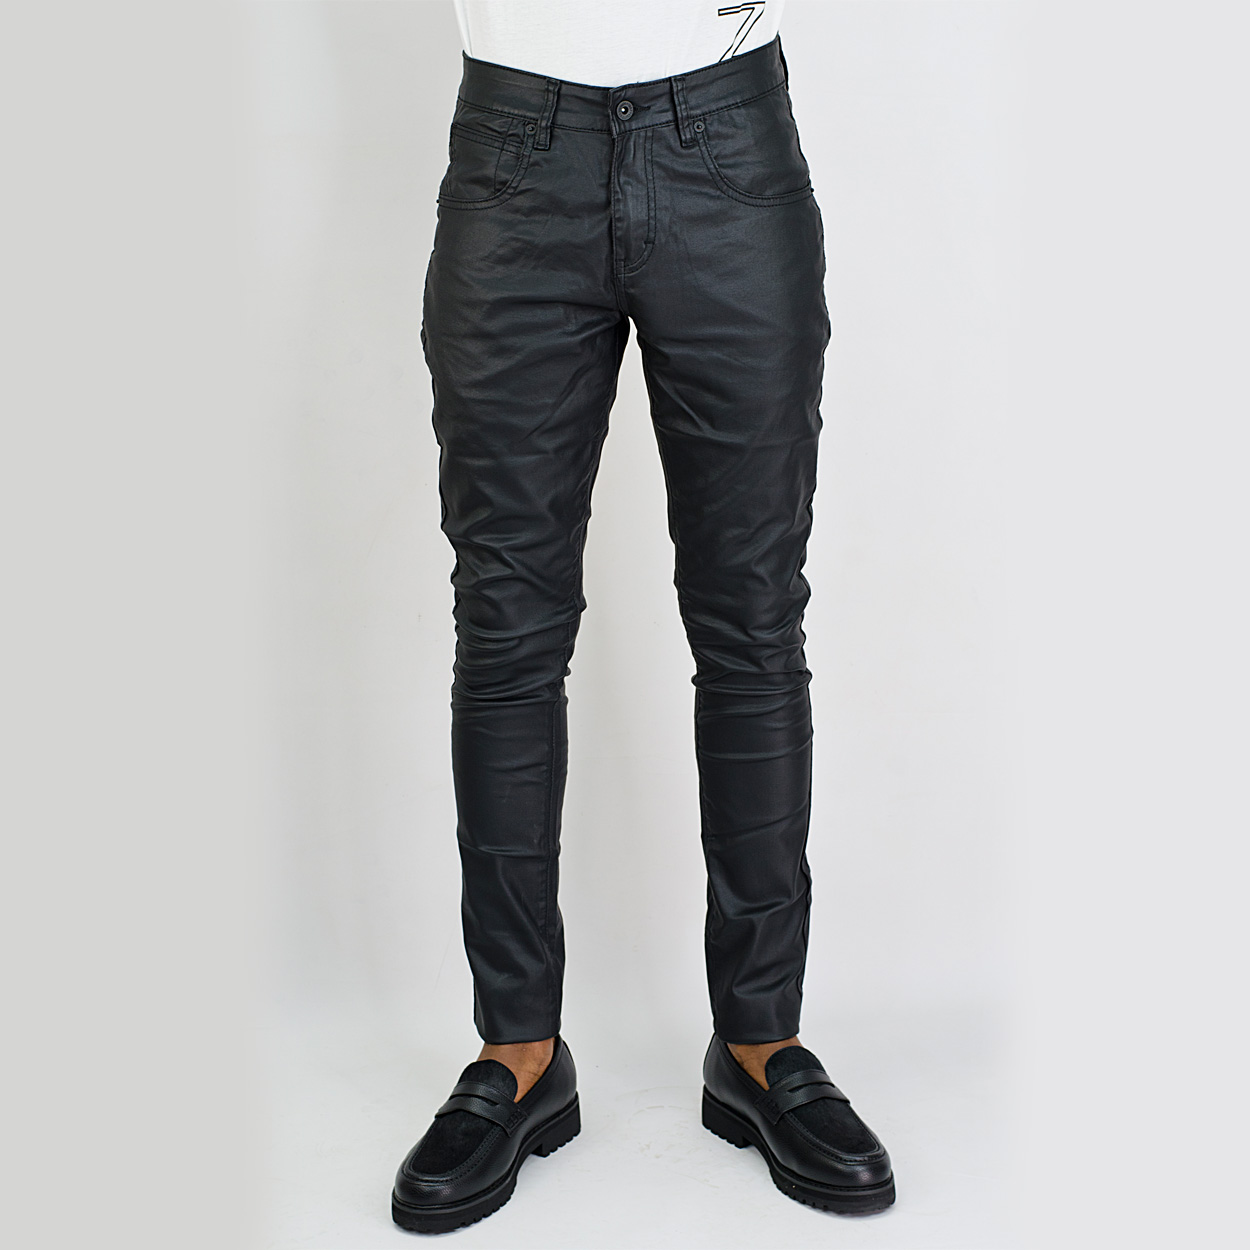 Cutty Zaid Jeans Black - Californian